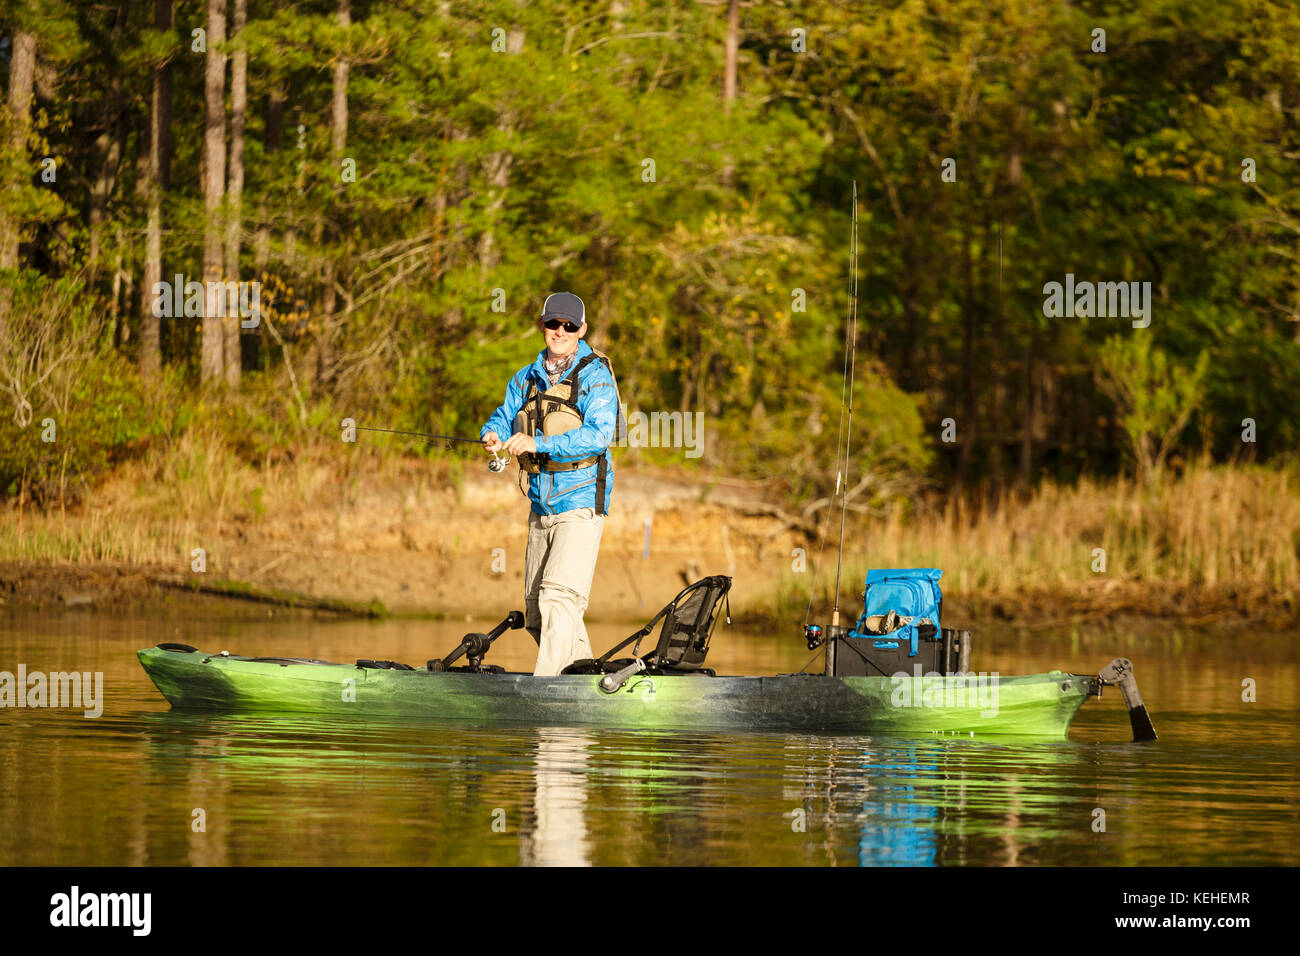 Caucasian man fishing on kayak Stock Photo